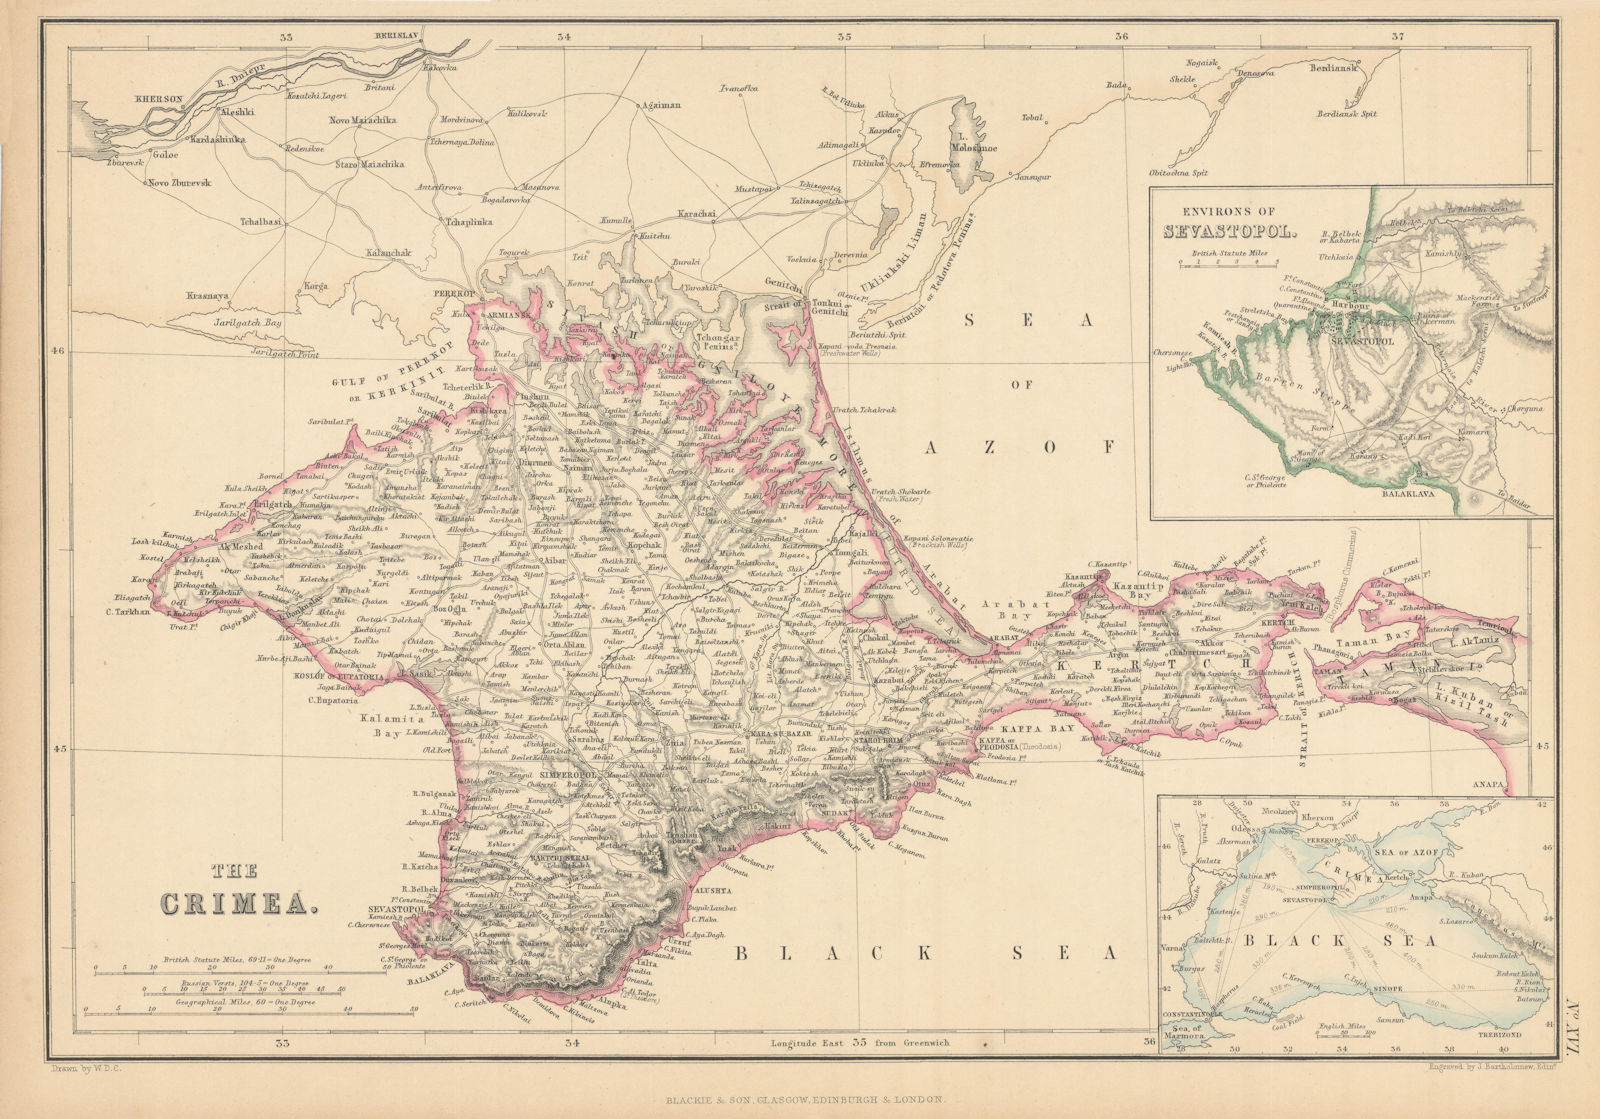 Associate Product The Crimea & Sevastopol environs by John Bartholomew 1859 old antique map